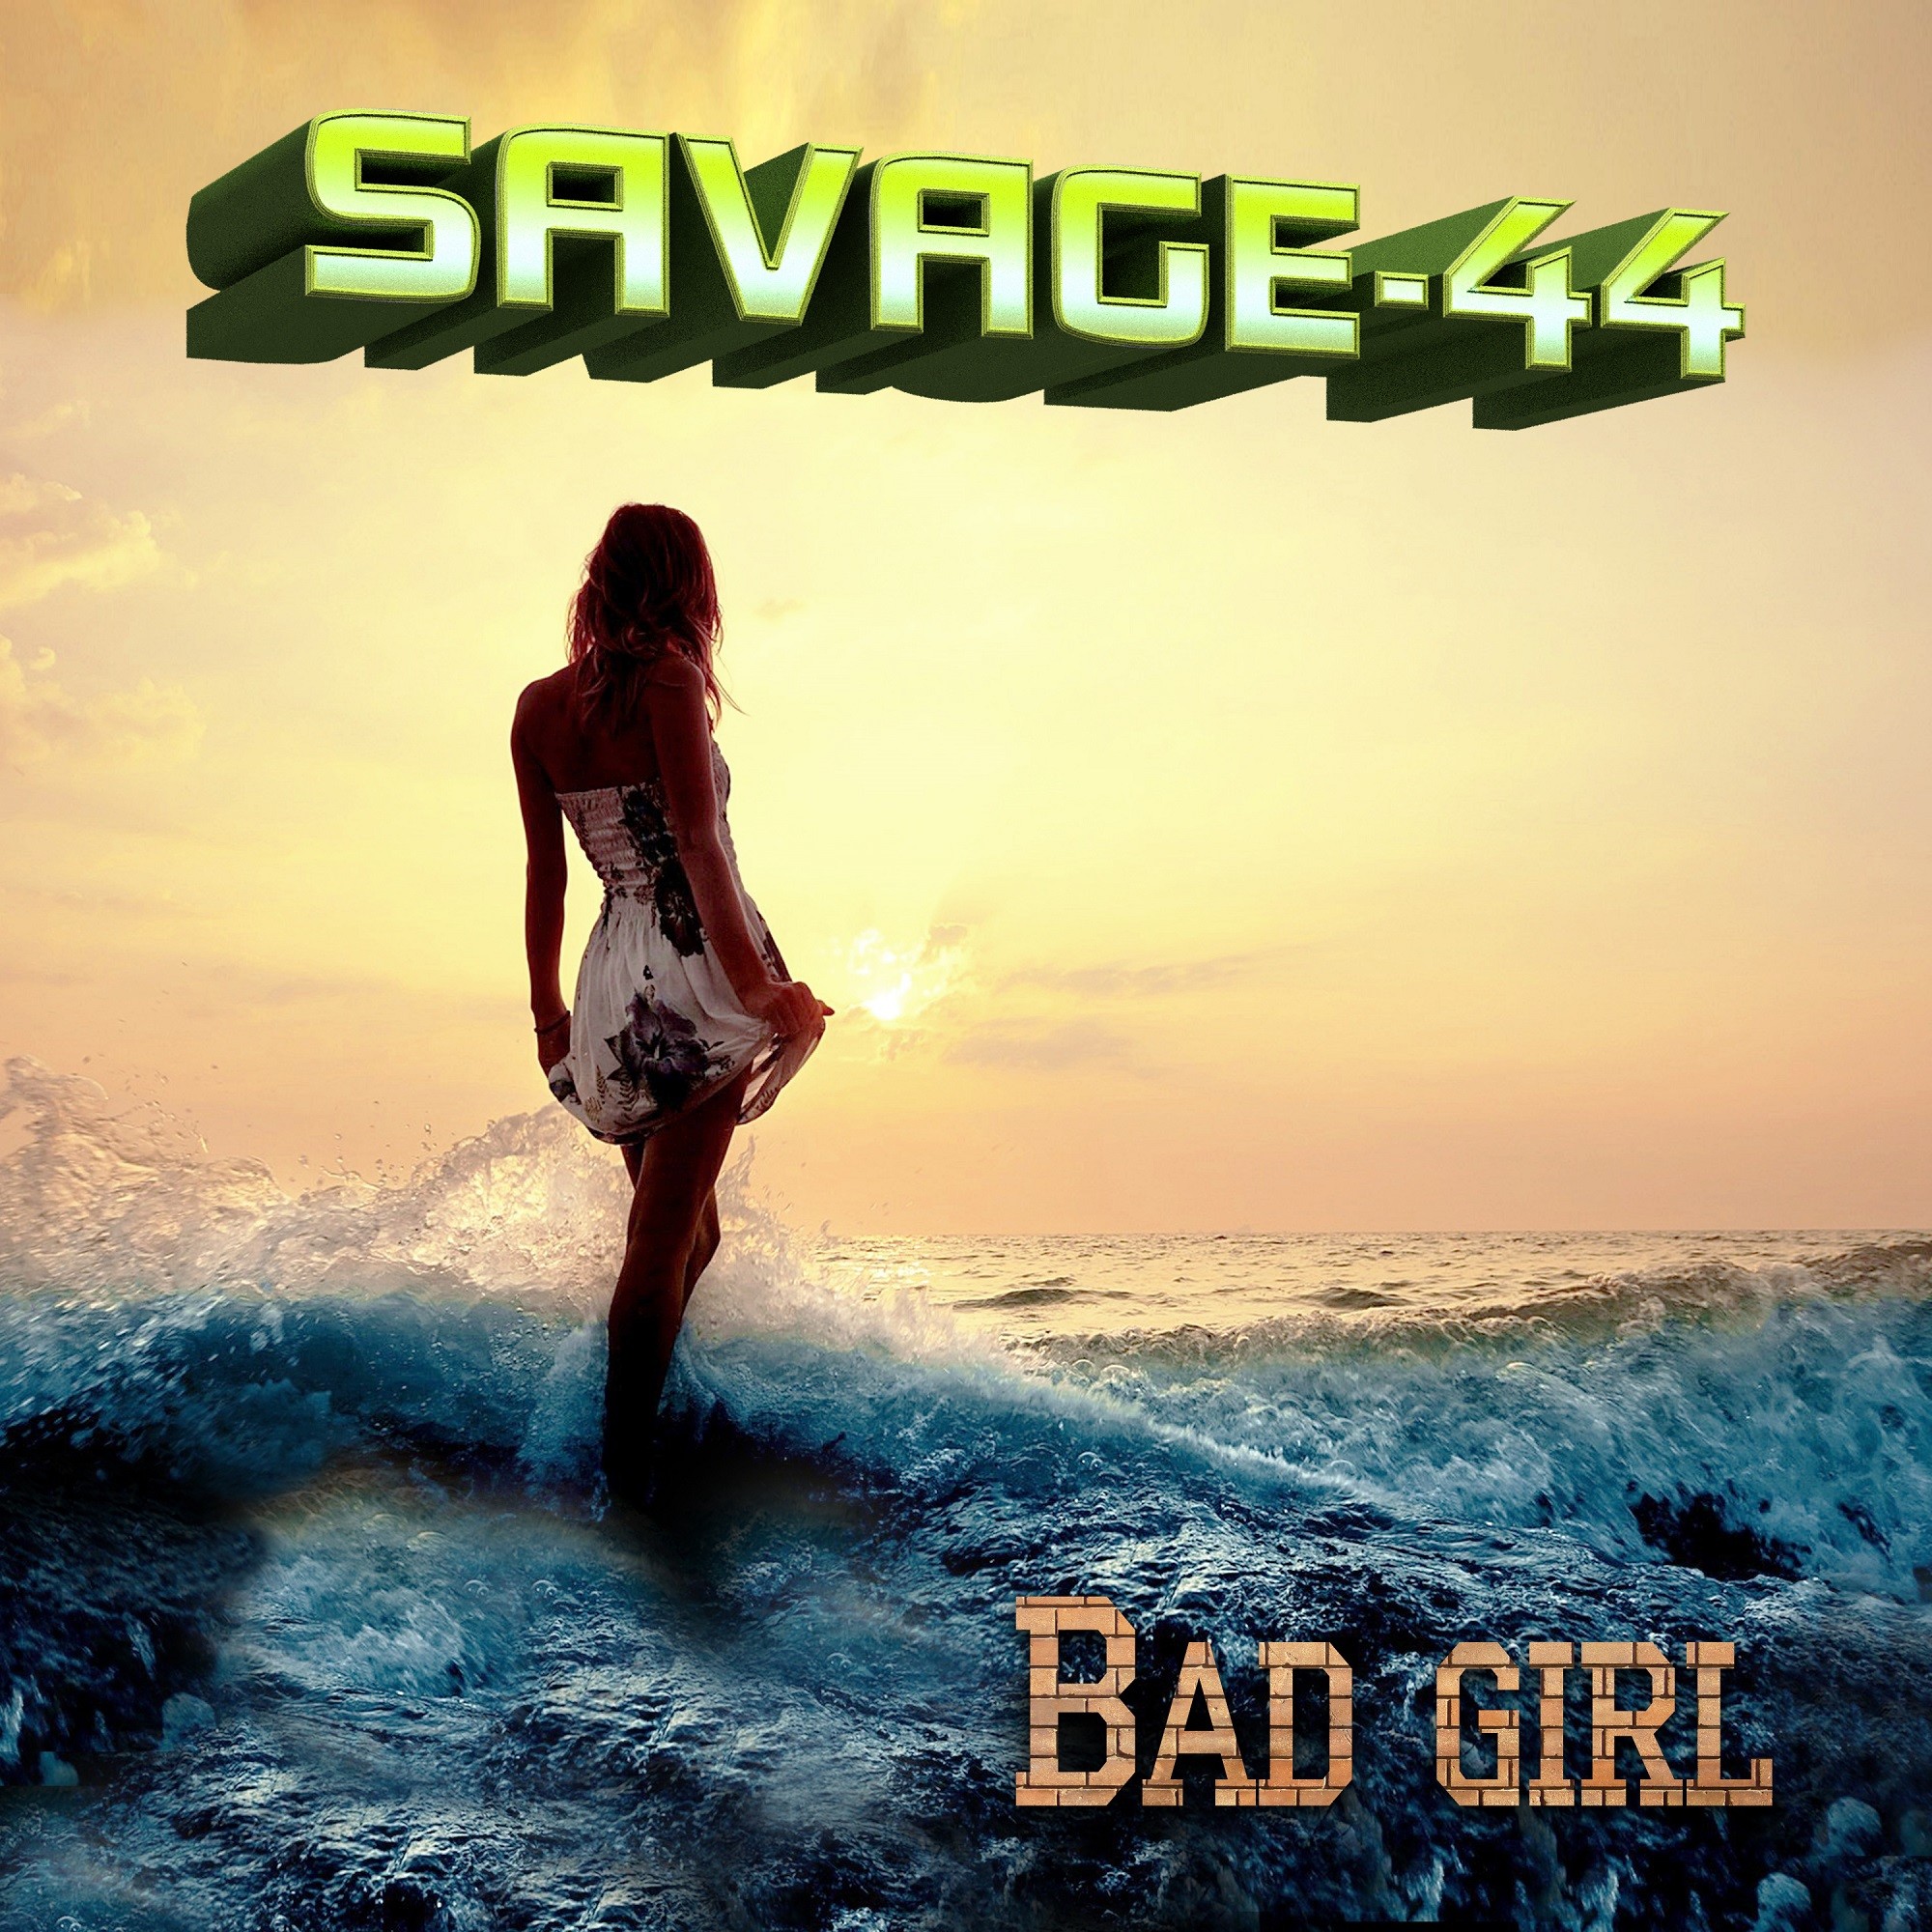 Savage 44 the music ring new. Savage 44. Саваж 44 Евроданс. Savage 44 девушки. Savage музыкант.